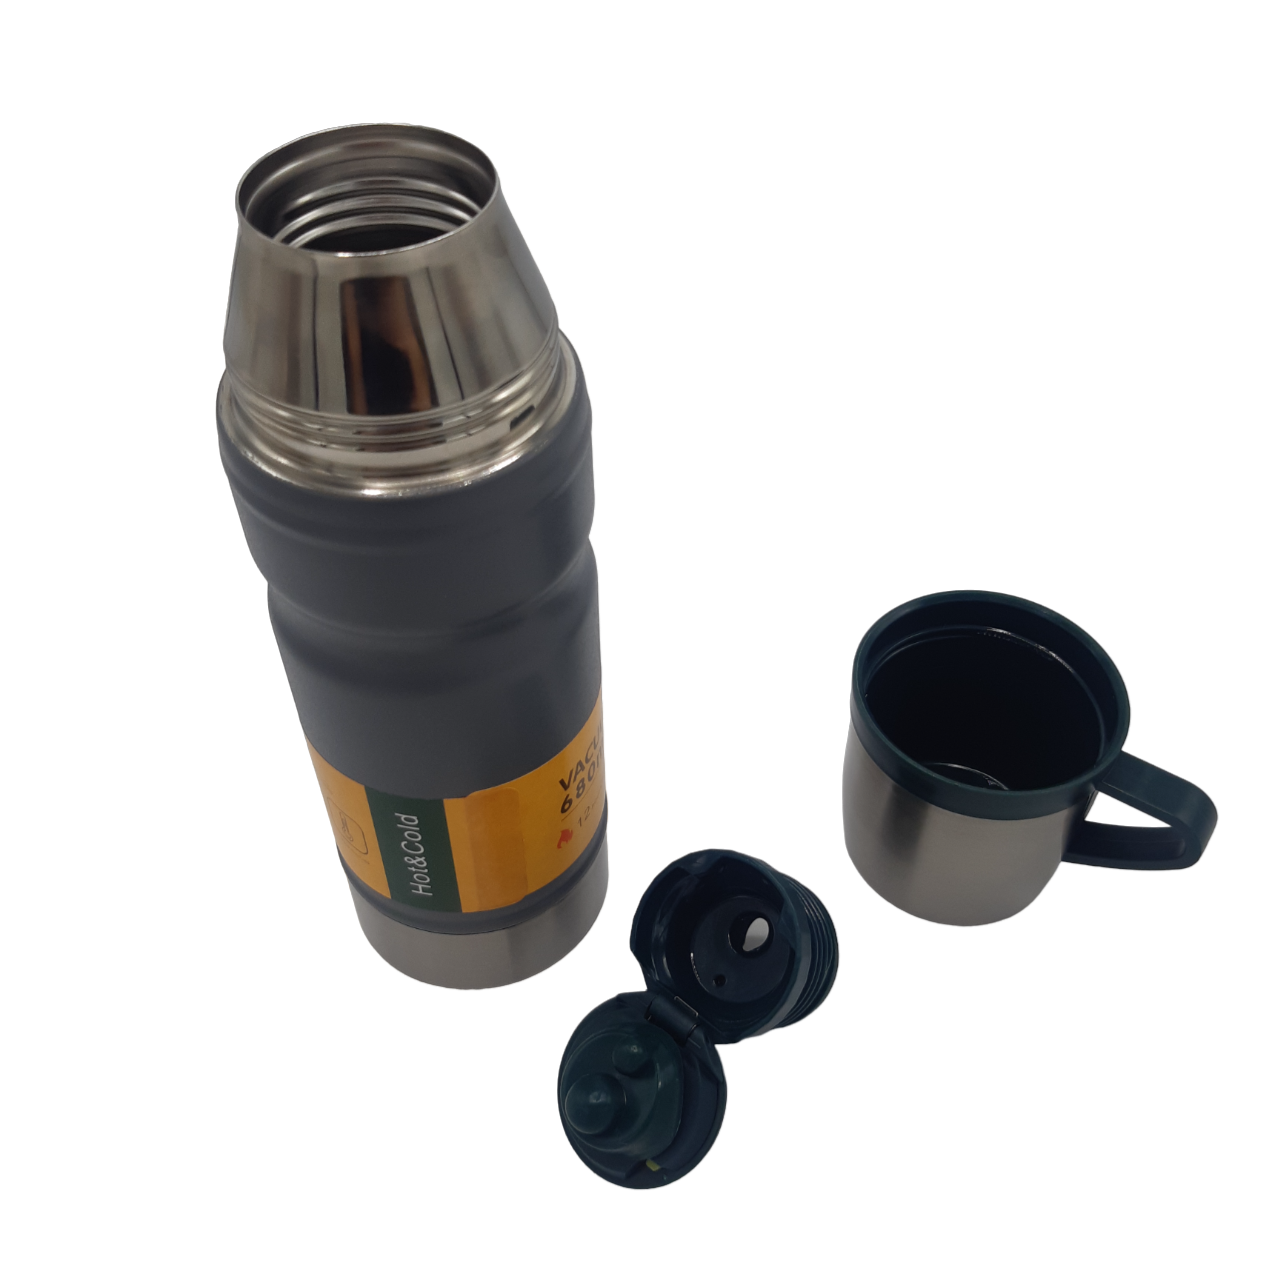 فلاسک Vacuum Cup ظرفیت 0.68 لیتر